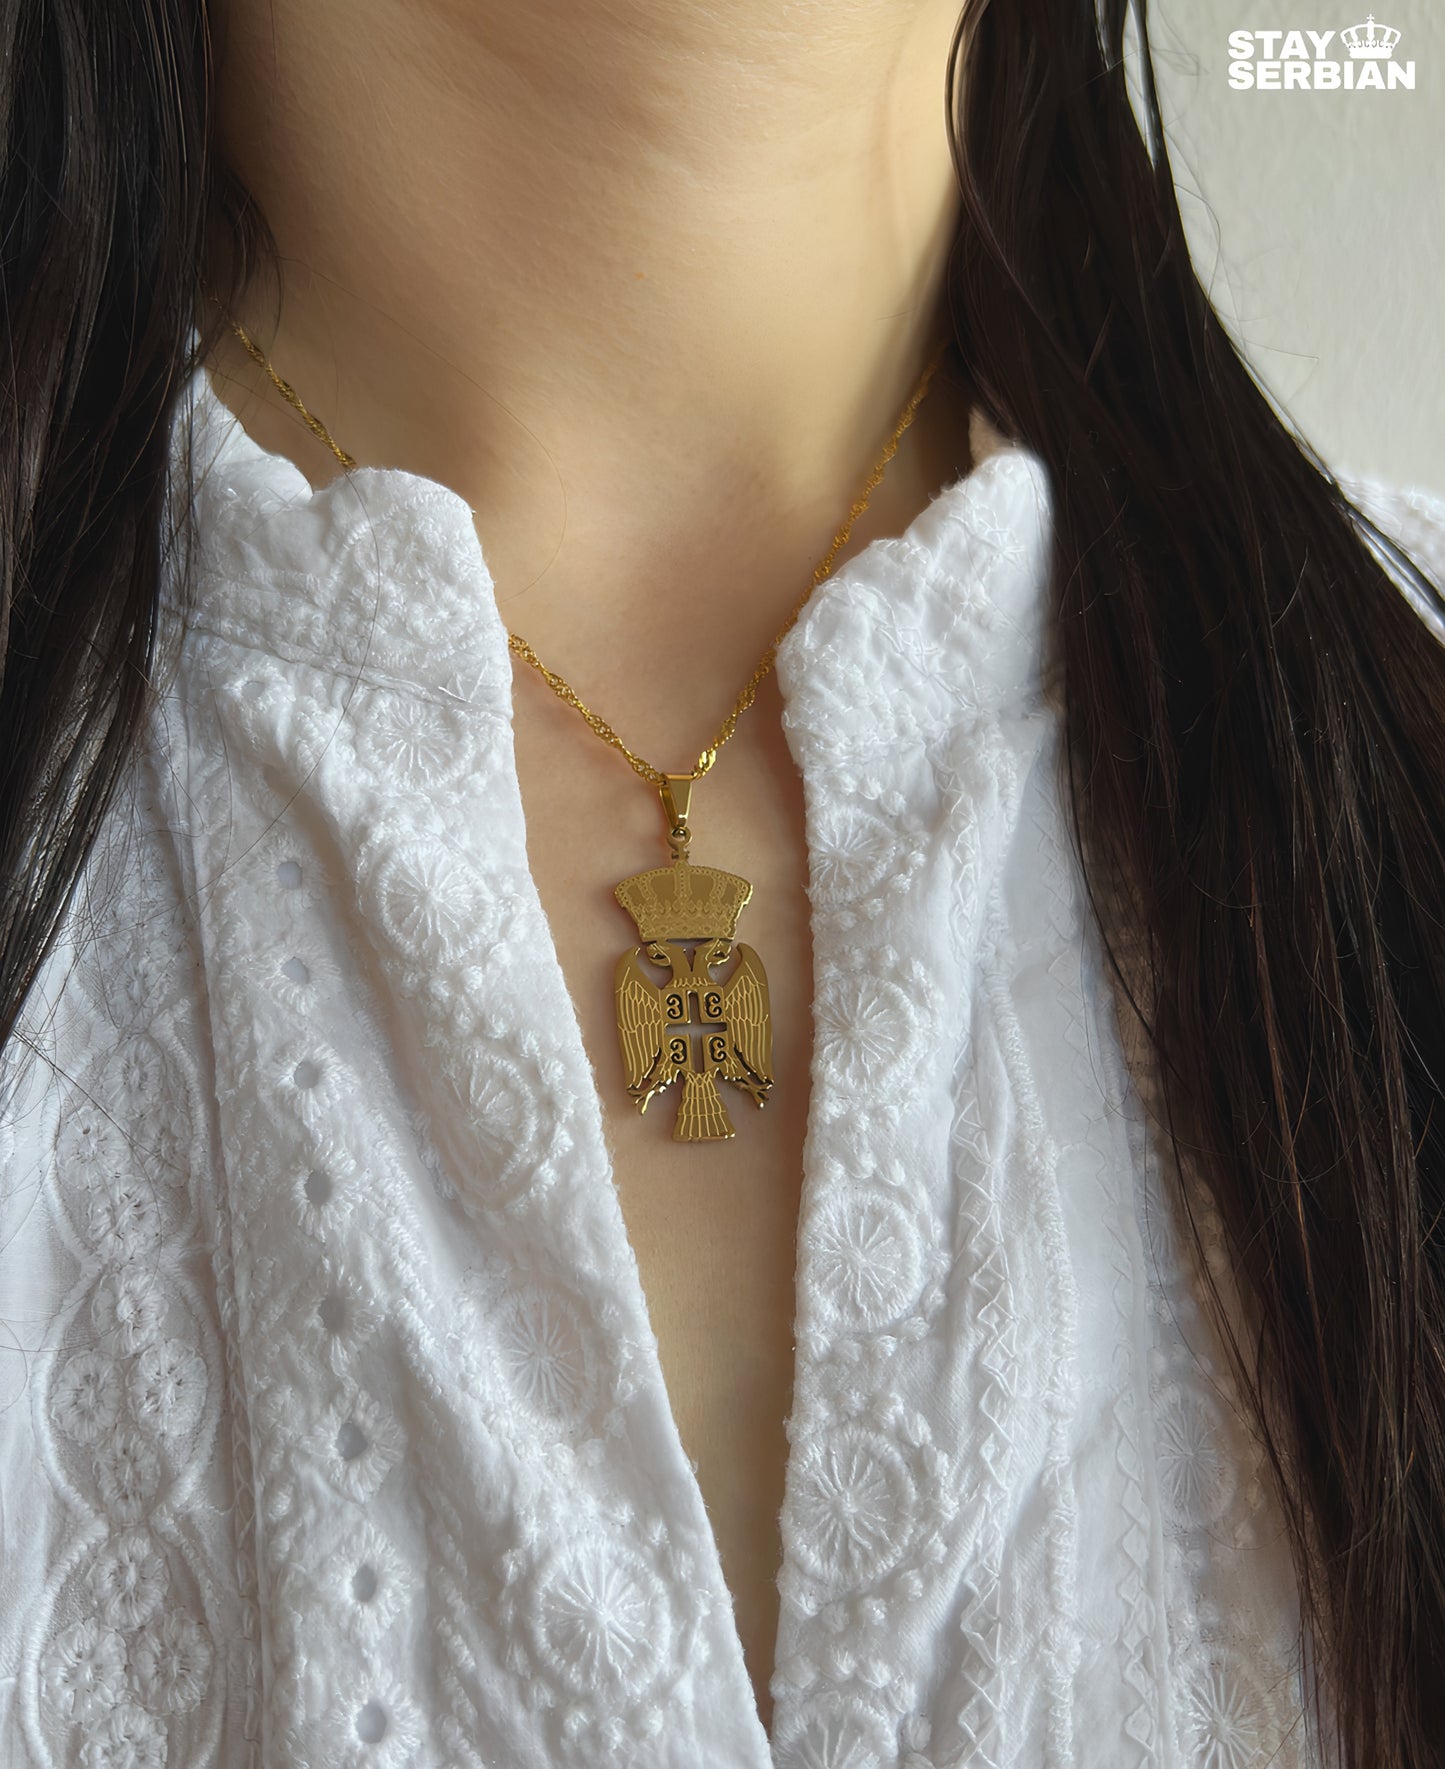 Serbian eagle necklace